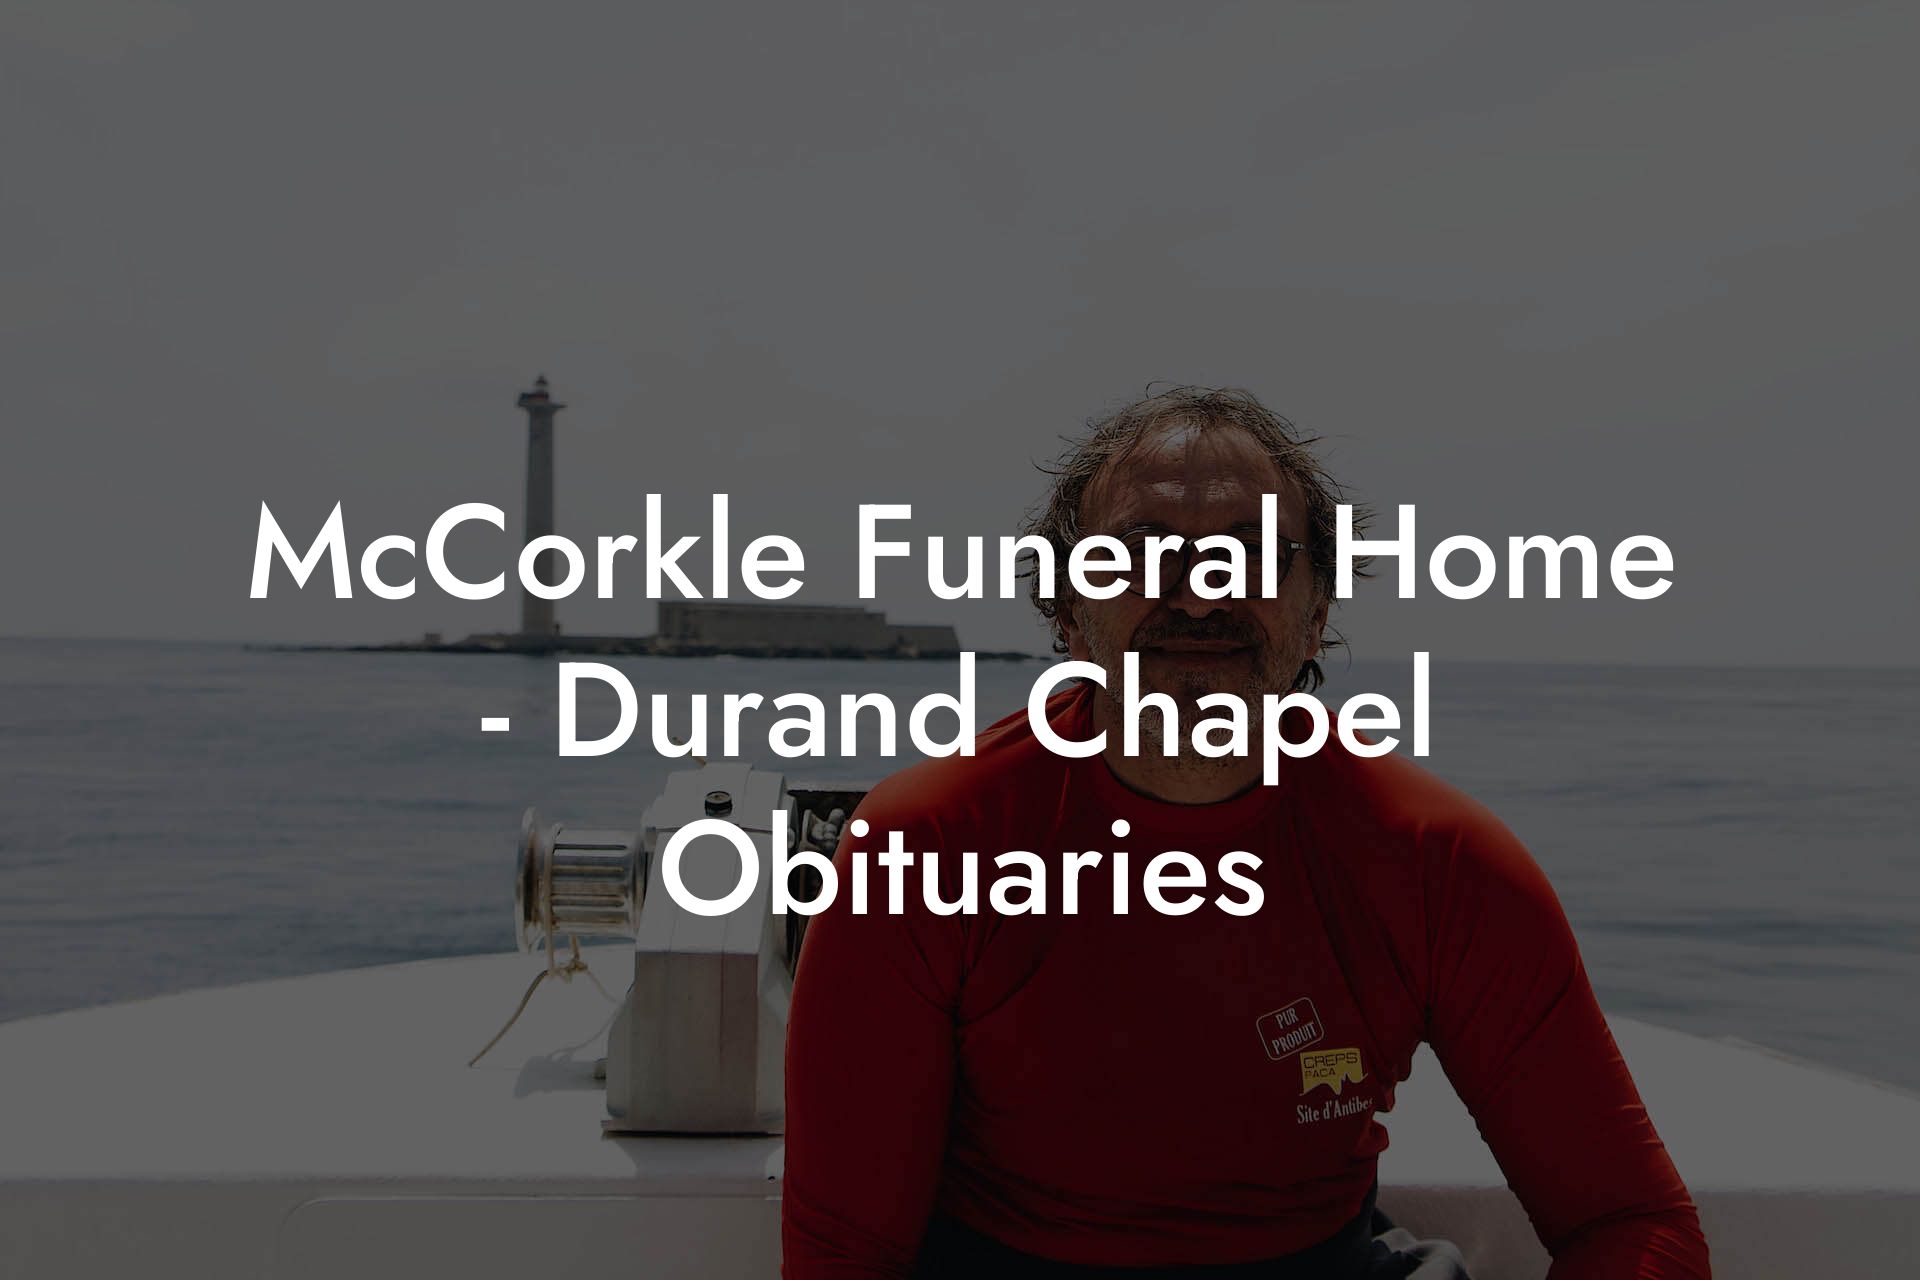 McCorkle Funeral Home - Durand Chapel Obituaries